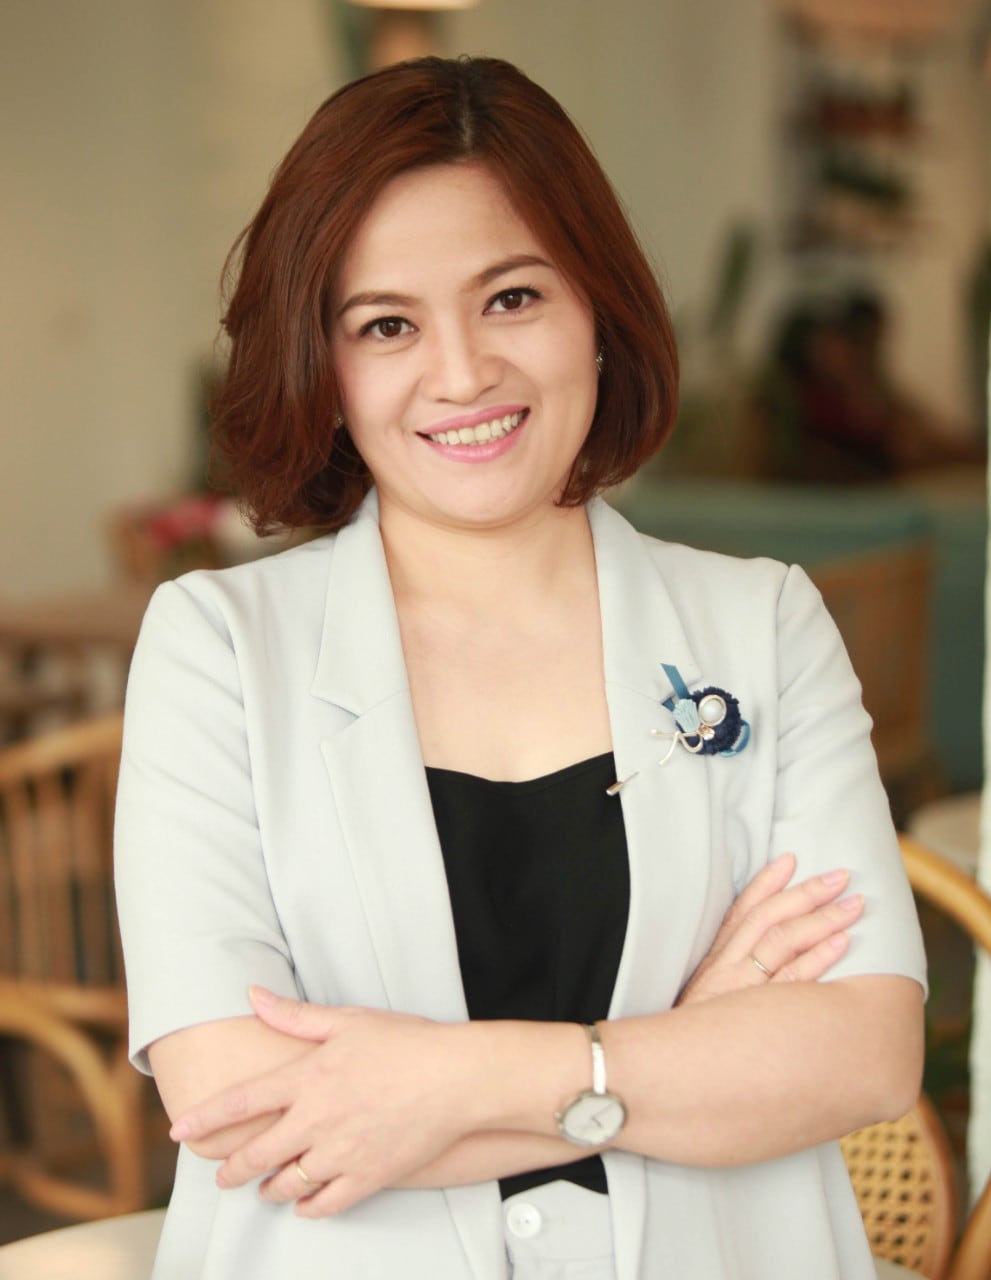 University of Sydney alumna and CEO of Savvycom, Thanh Van Dang